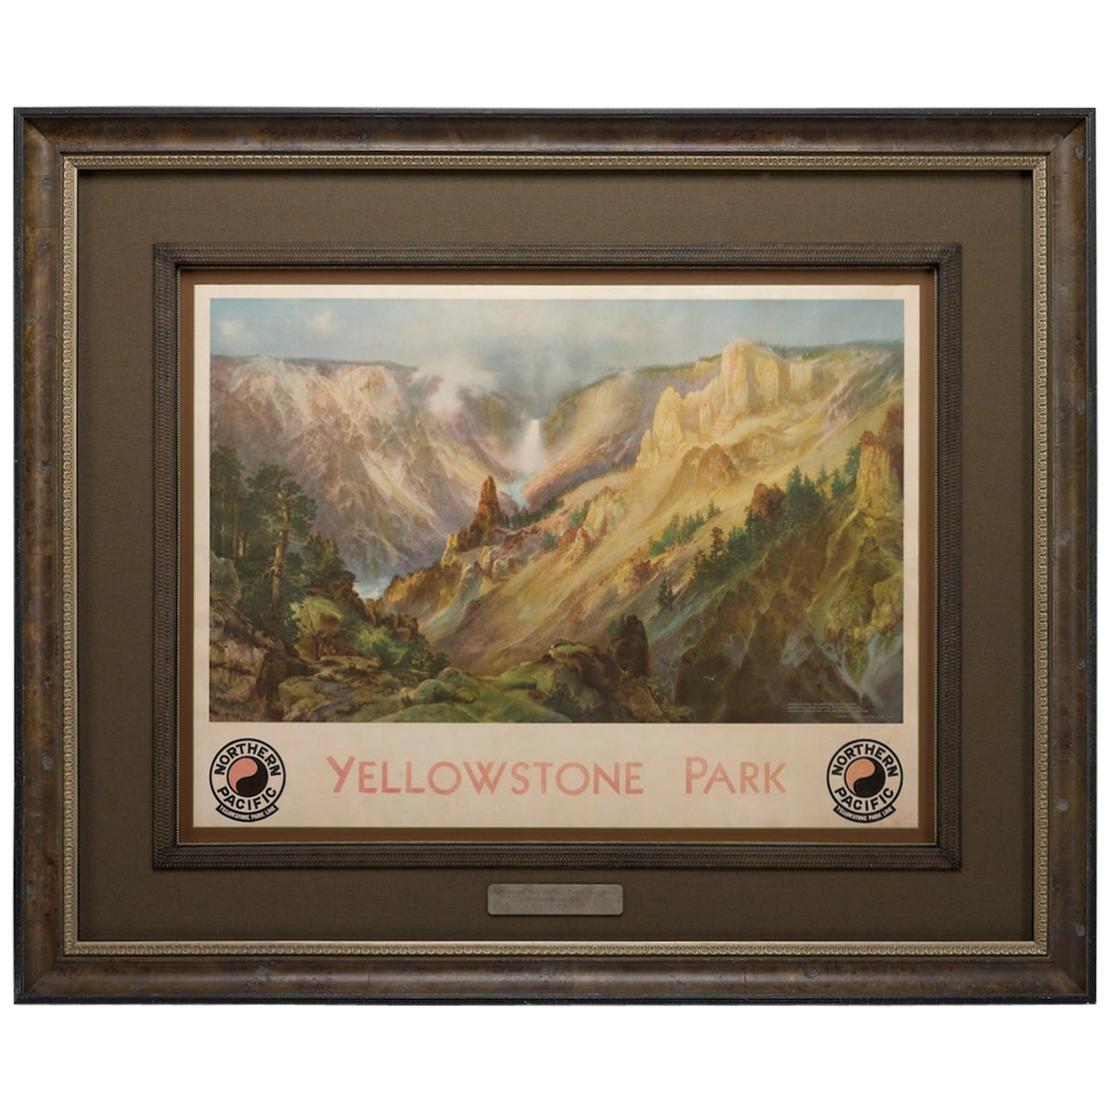 Northern Pacific Railroad Poster, "Yellowstone Park" after Thomas Moran, 1924